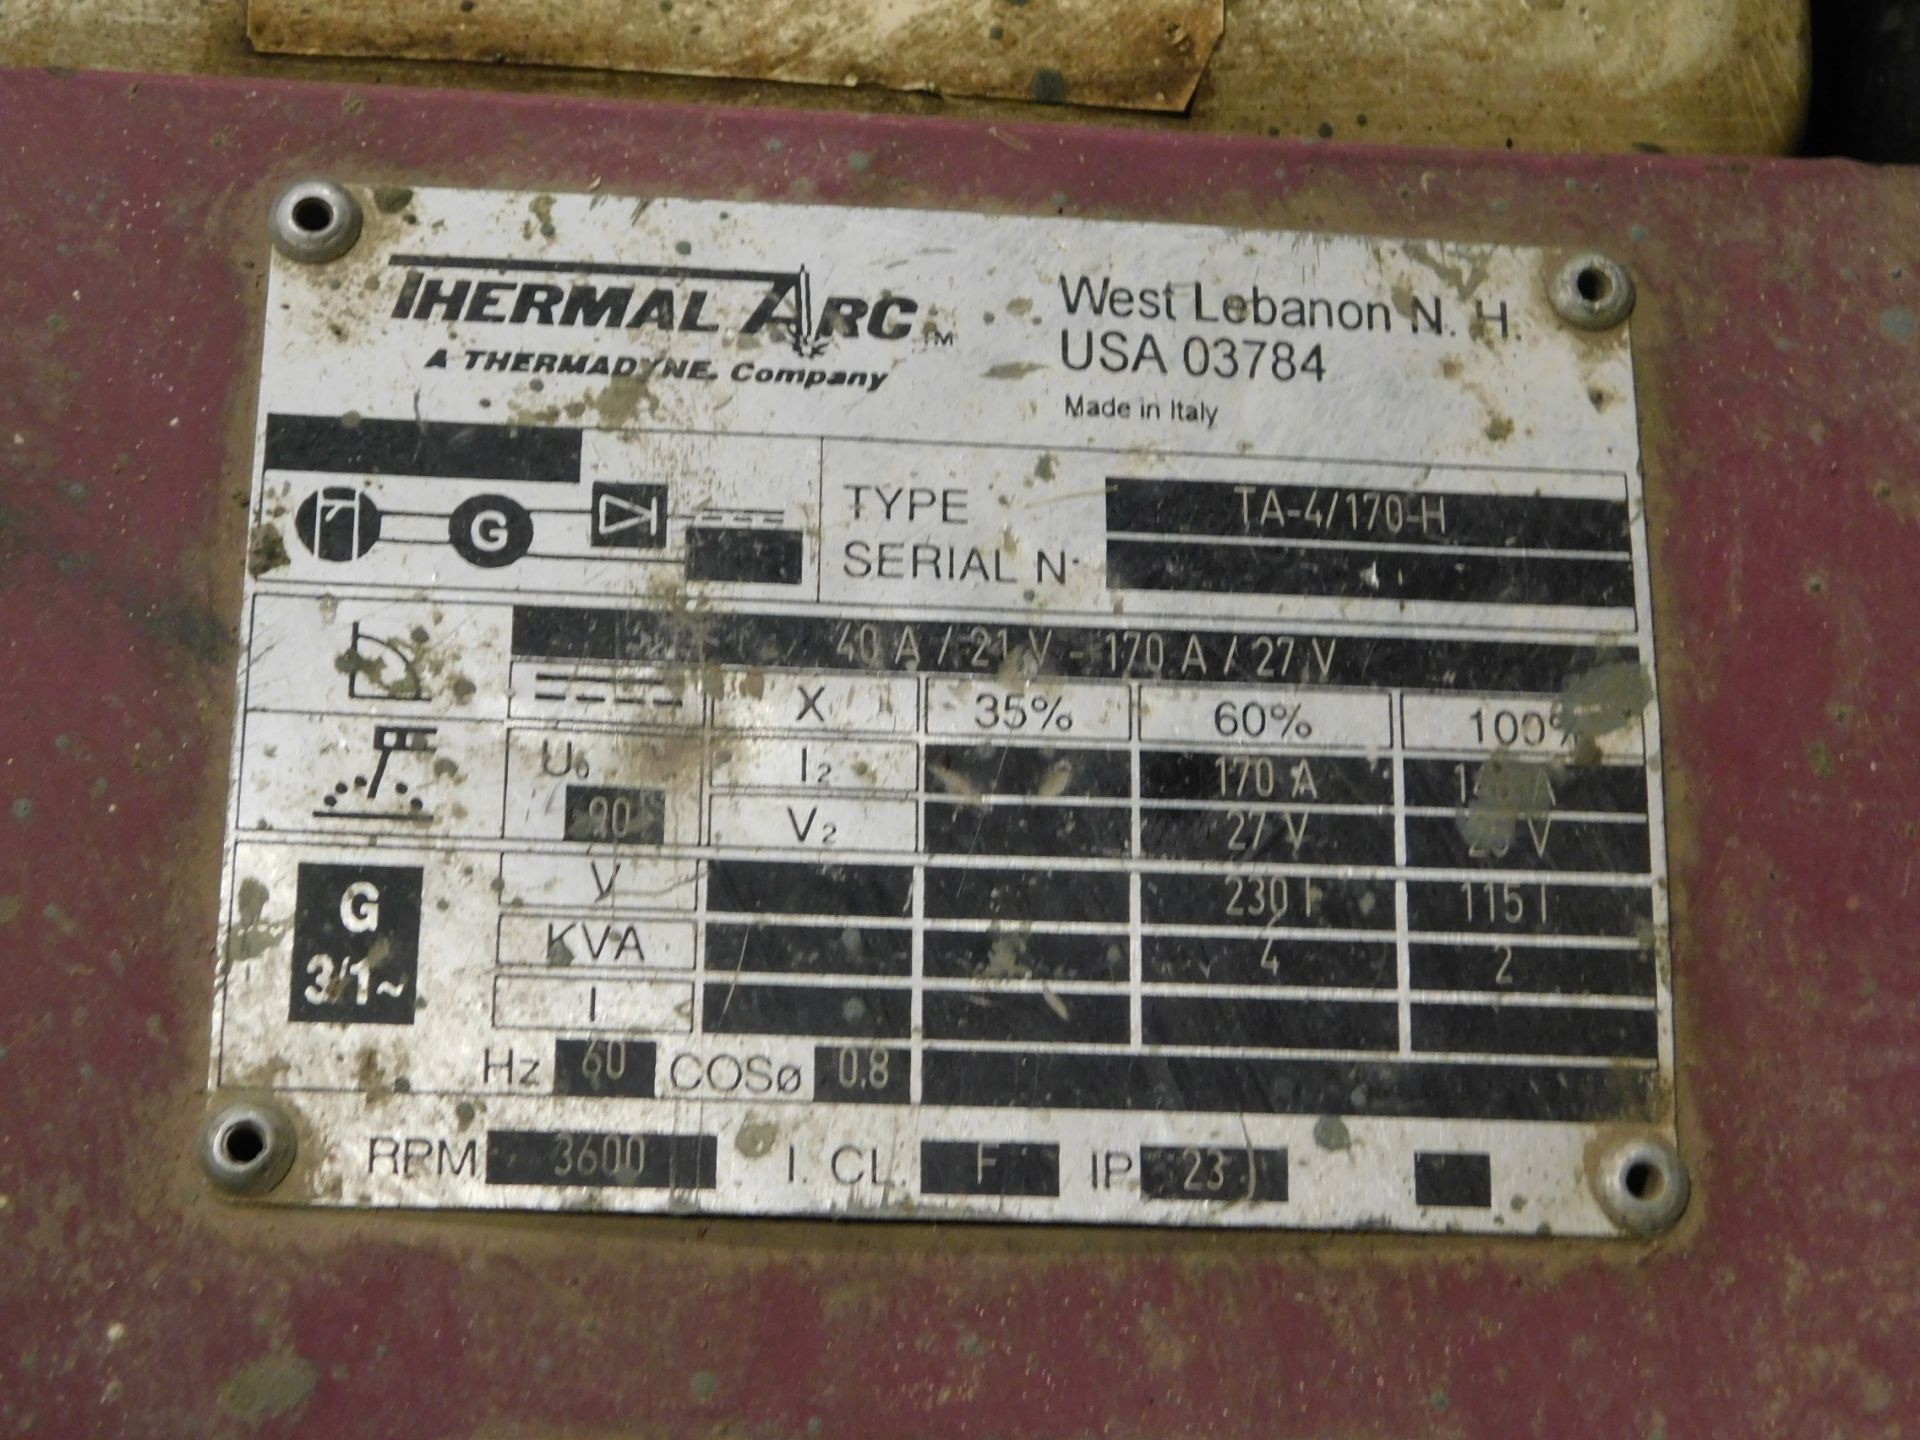 Thermal Arc DC-CC Welding Generator, Honda 9 HP Gas Engine, Model TA-4/170-H, Welding Leads, 625 - Image 4 of 5